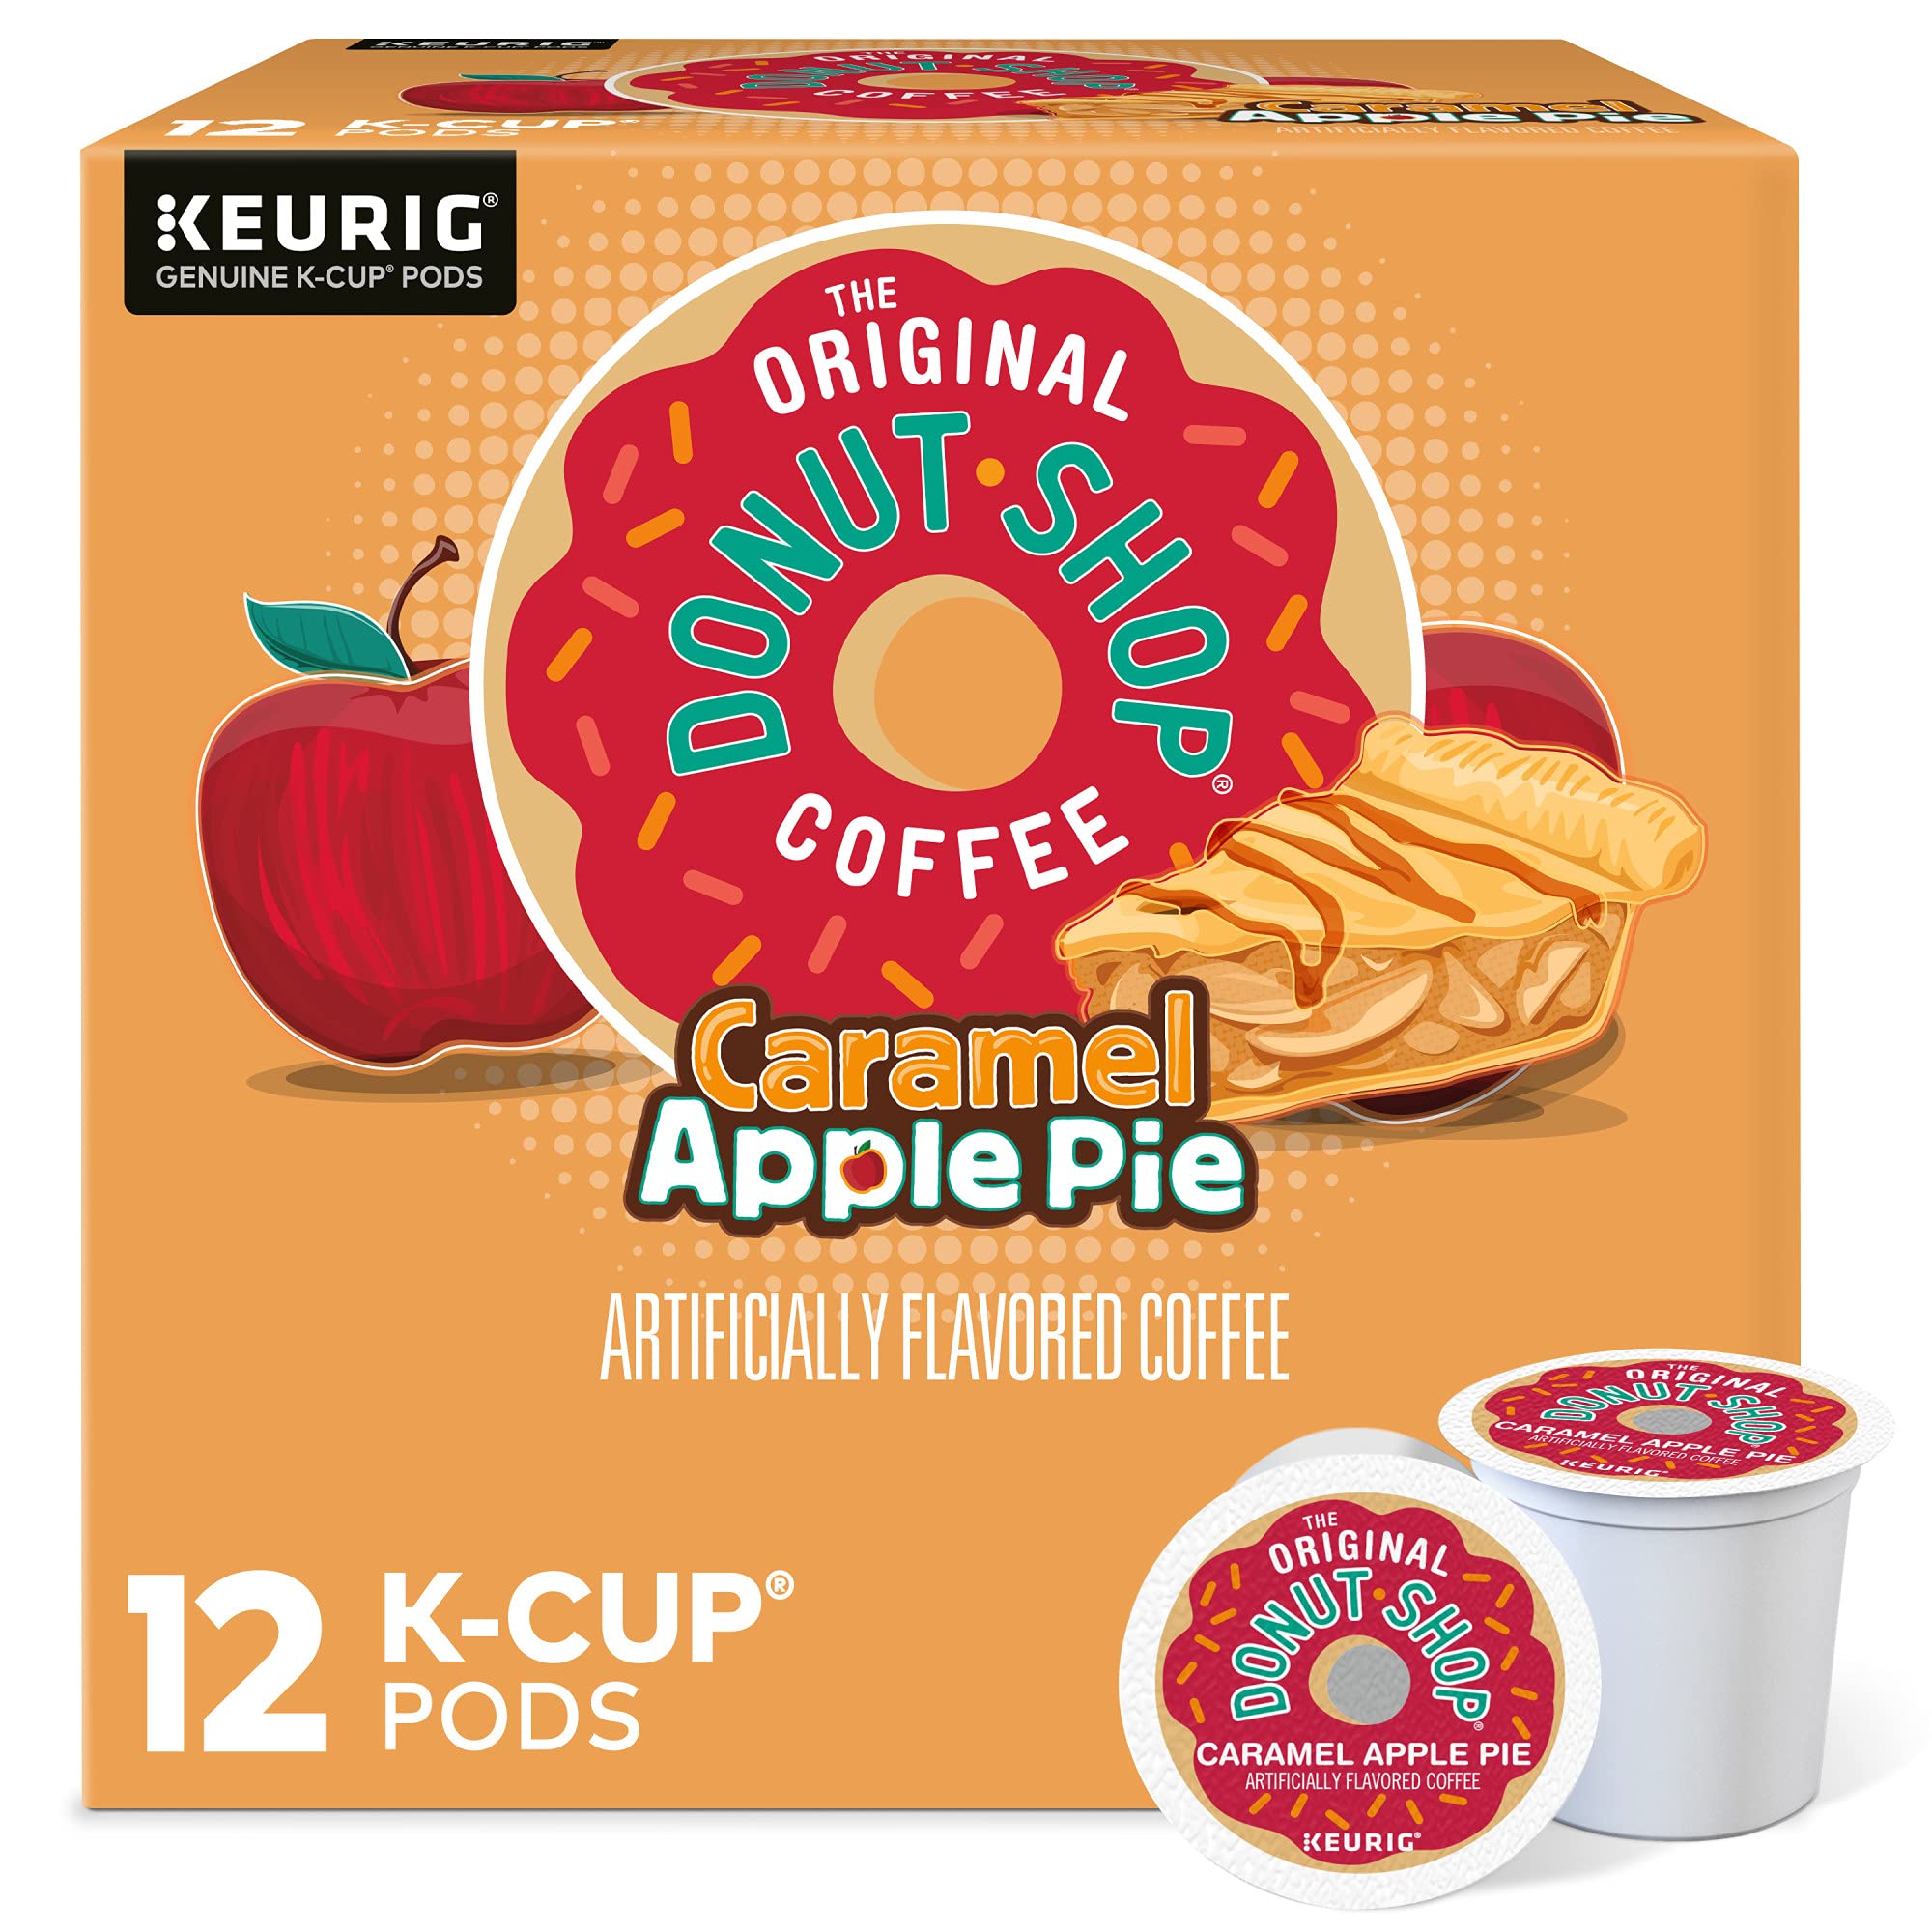 Keurig K-Cup Pod Light Roast Original Donut Shop